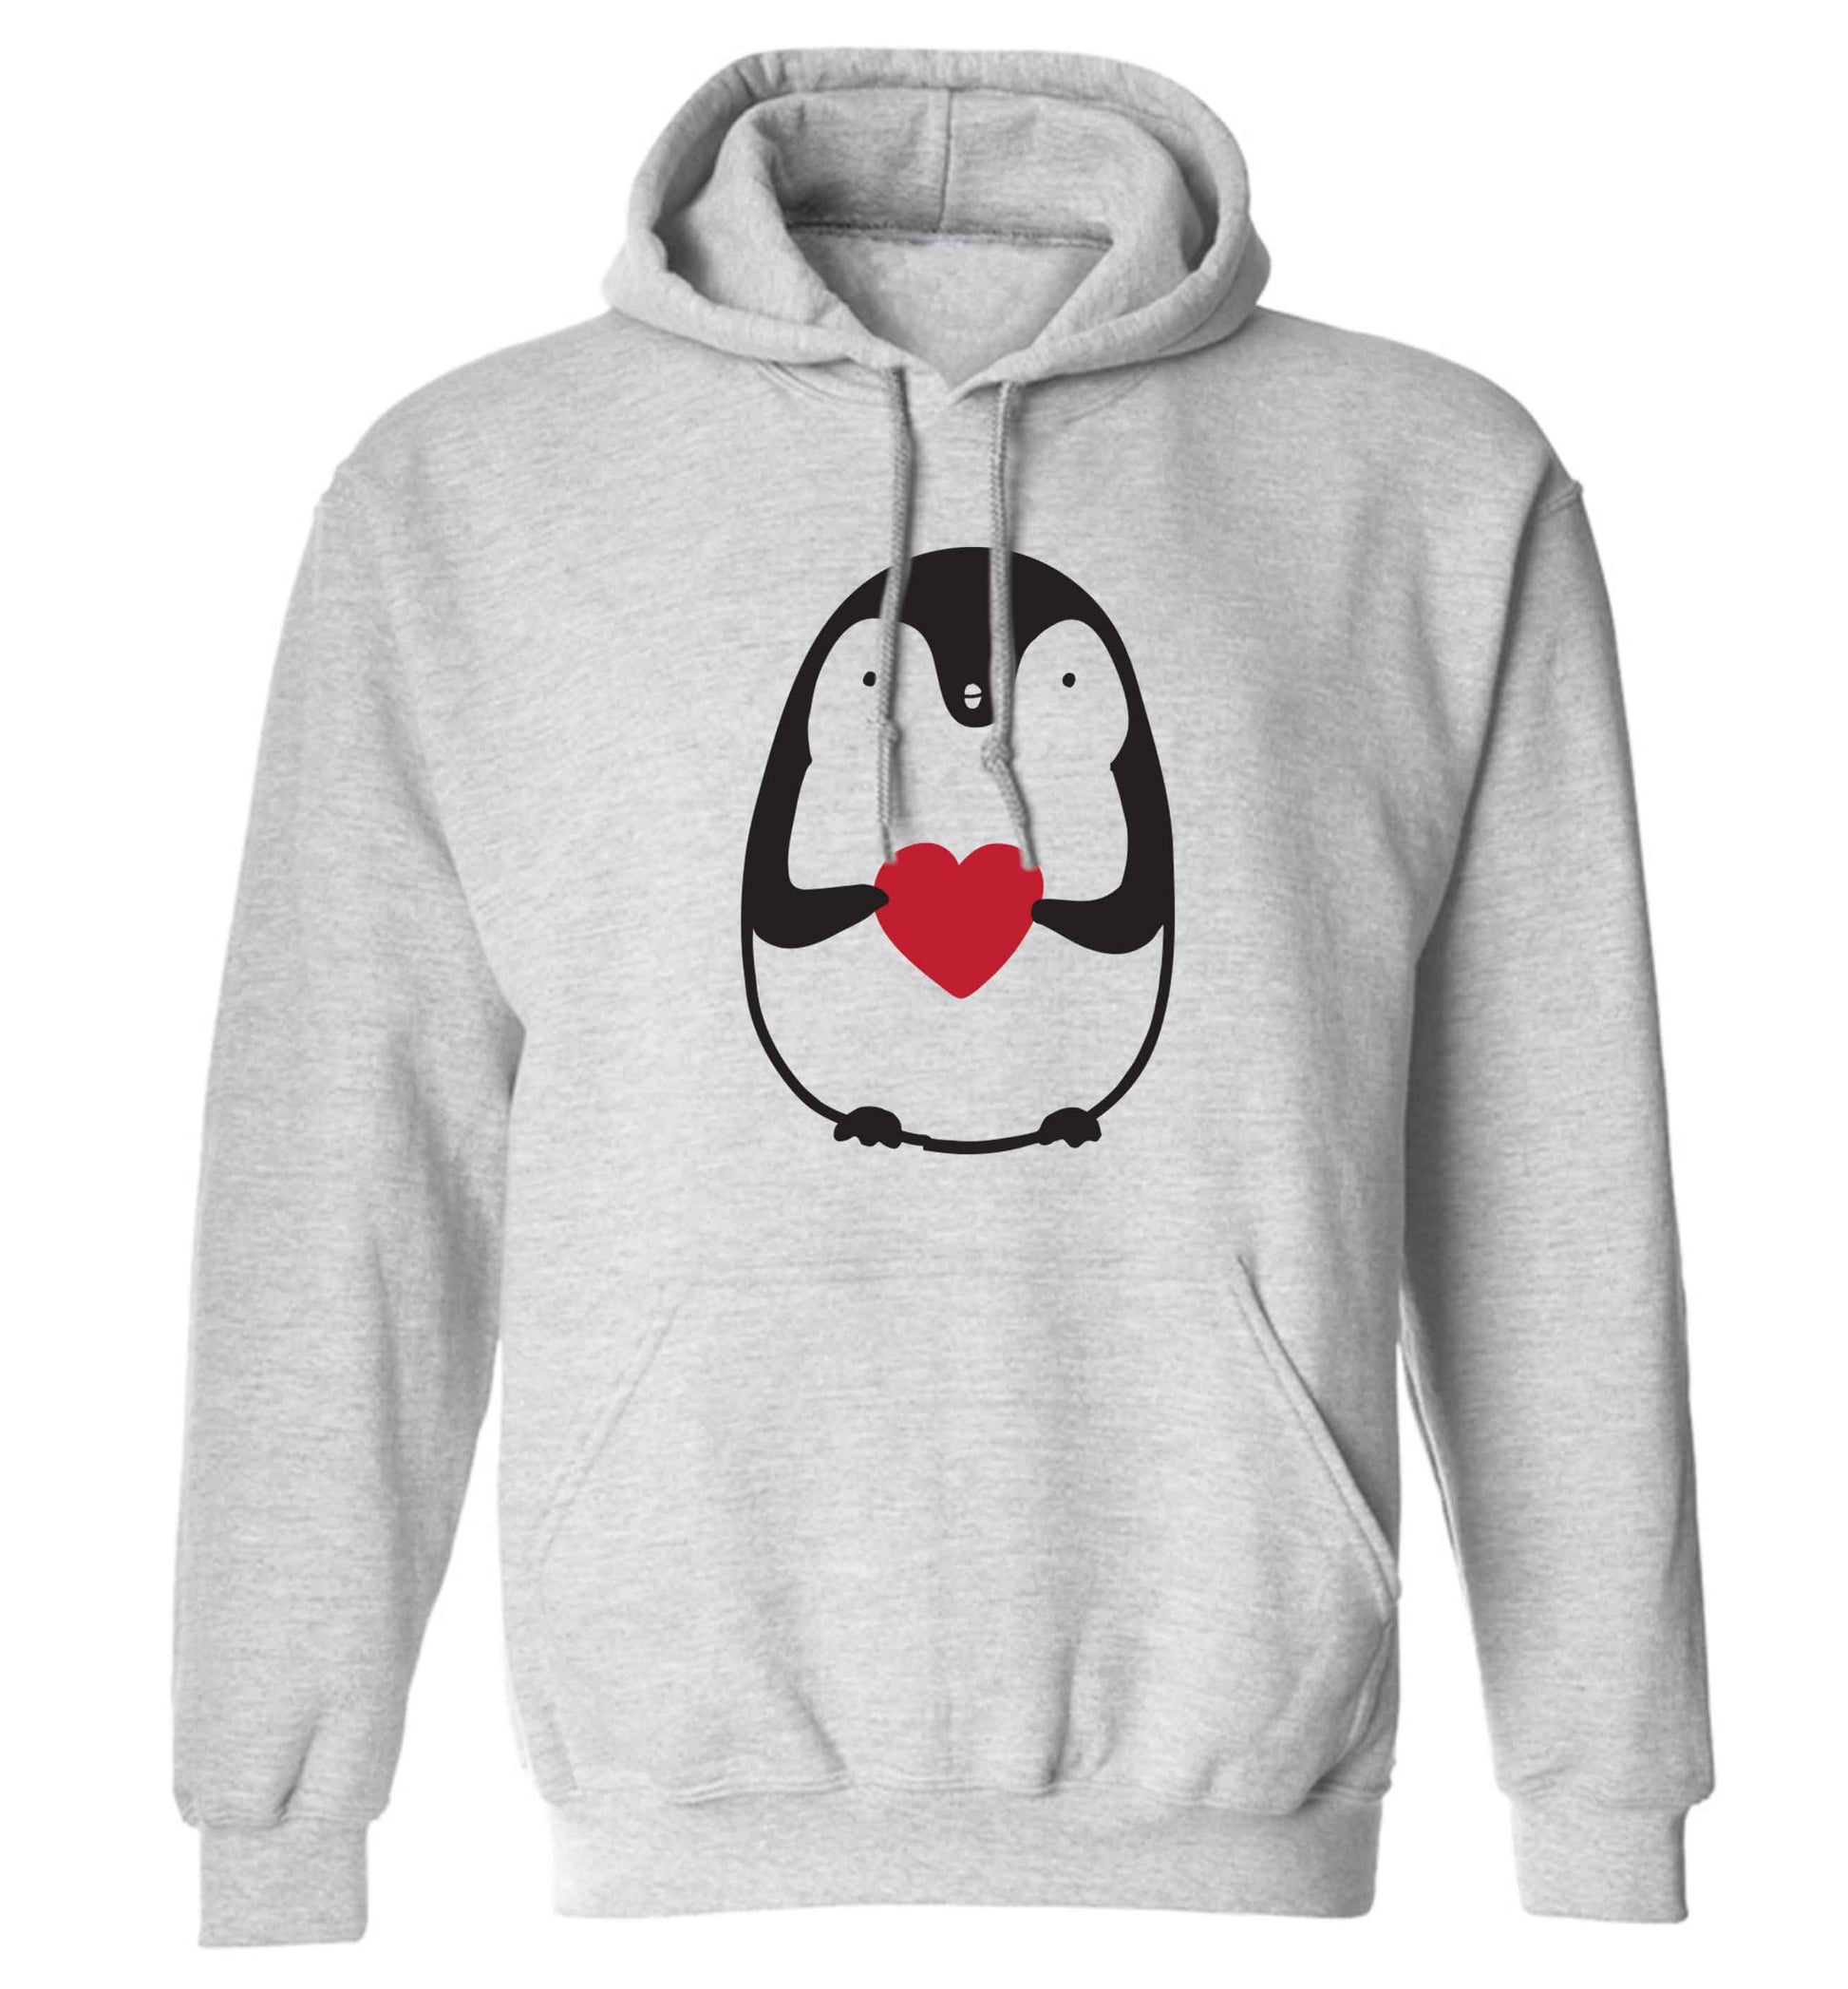 Cute penguin heart adults unisex grey hoodie 2XL